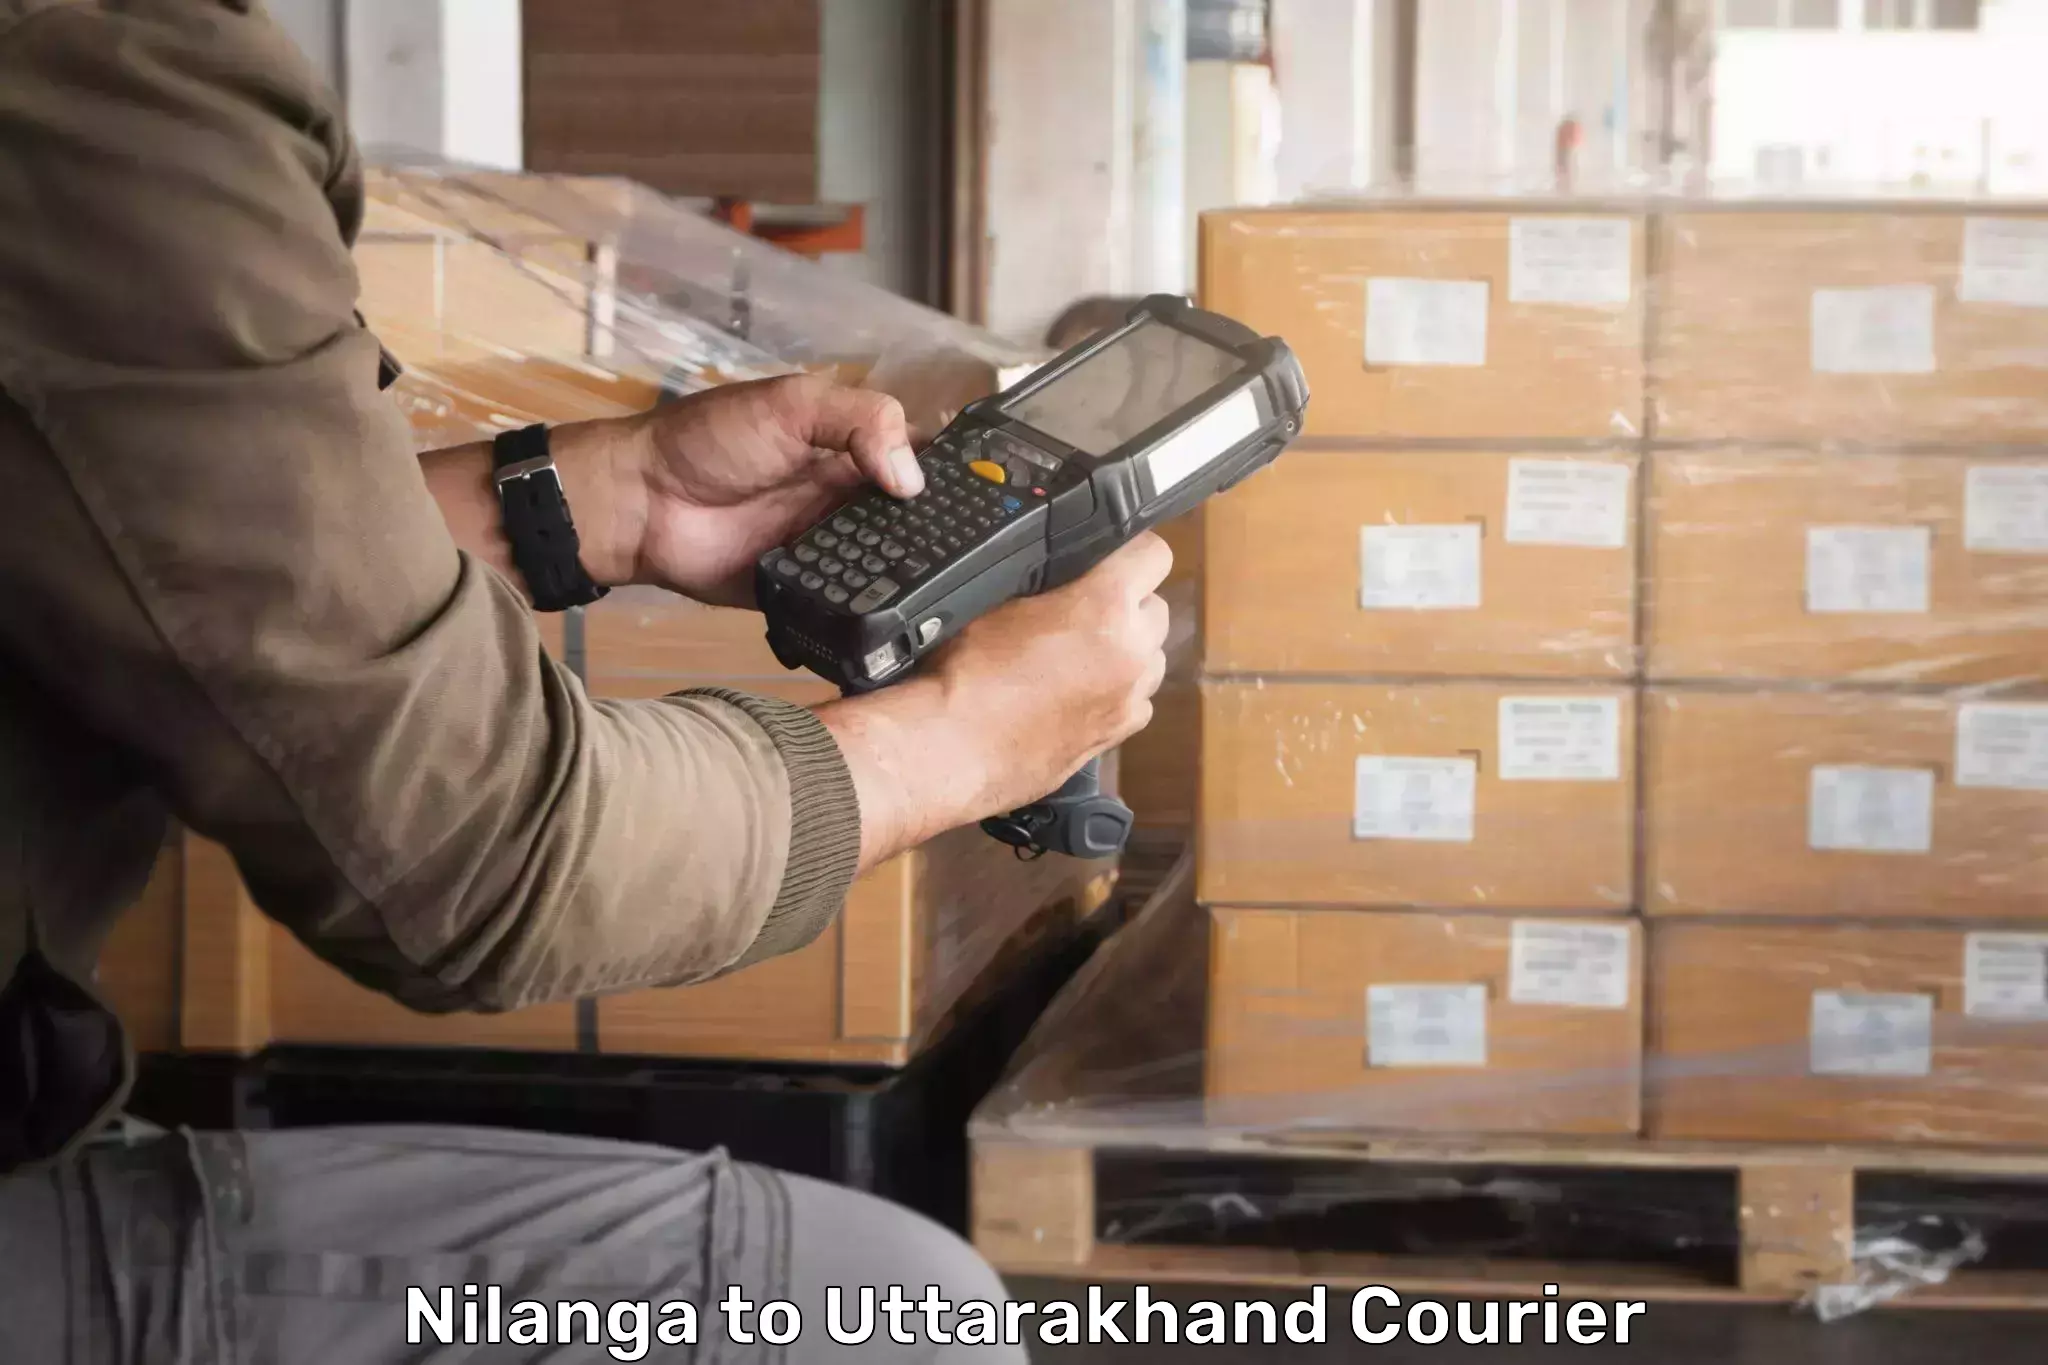 Professional courier handling Nilanga to IIT Roorkee